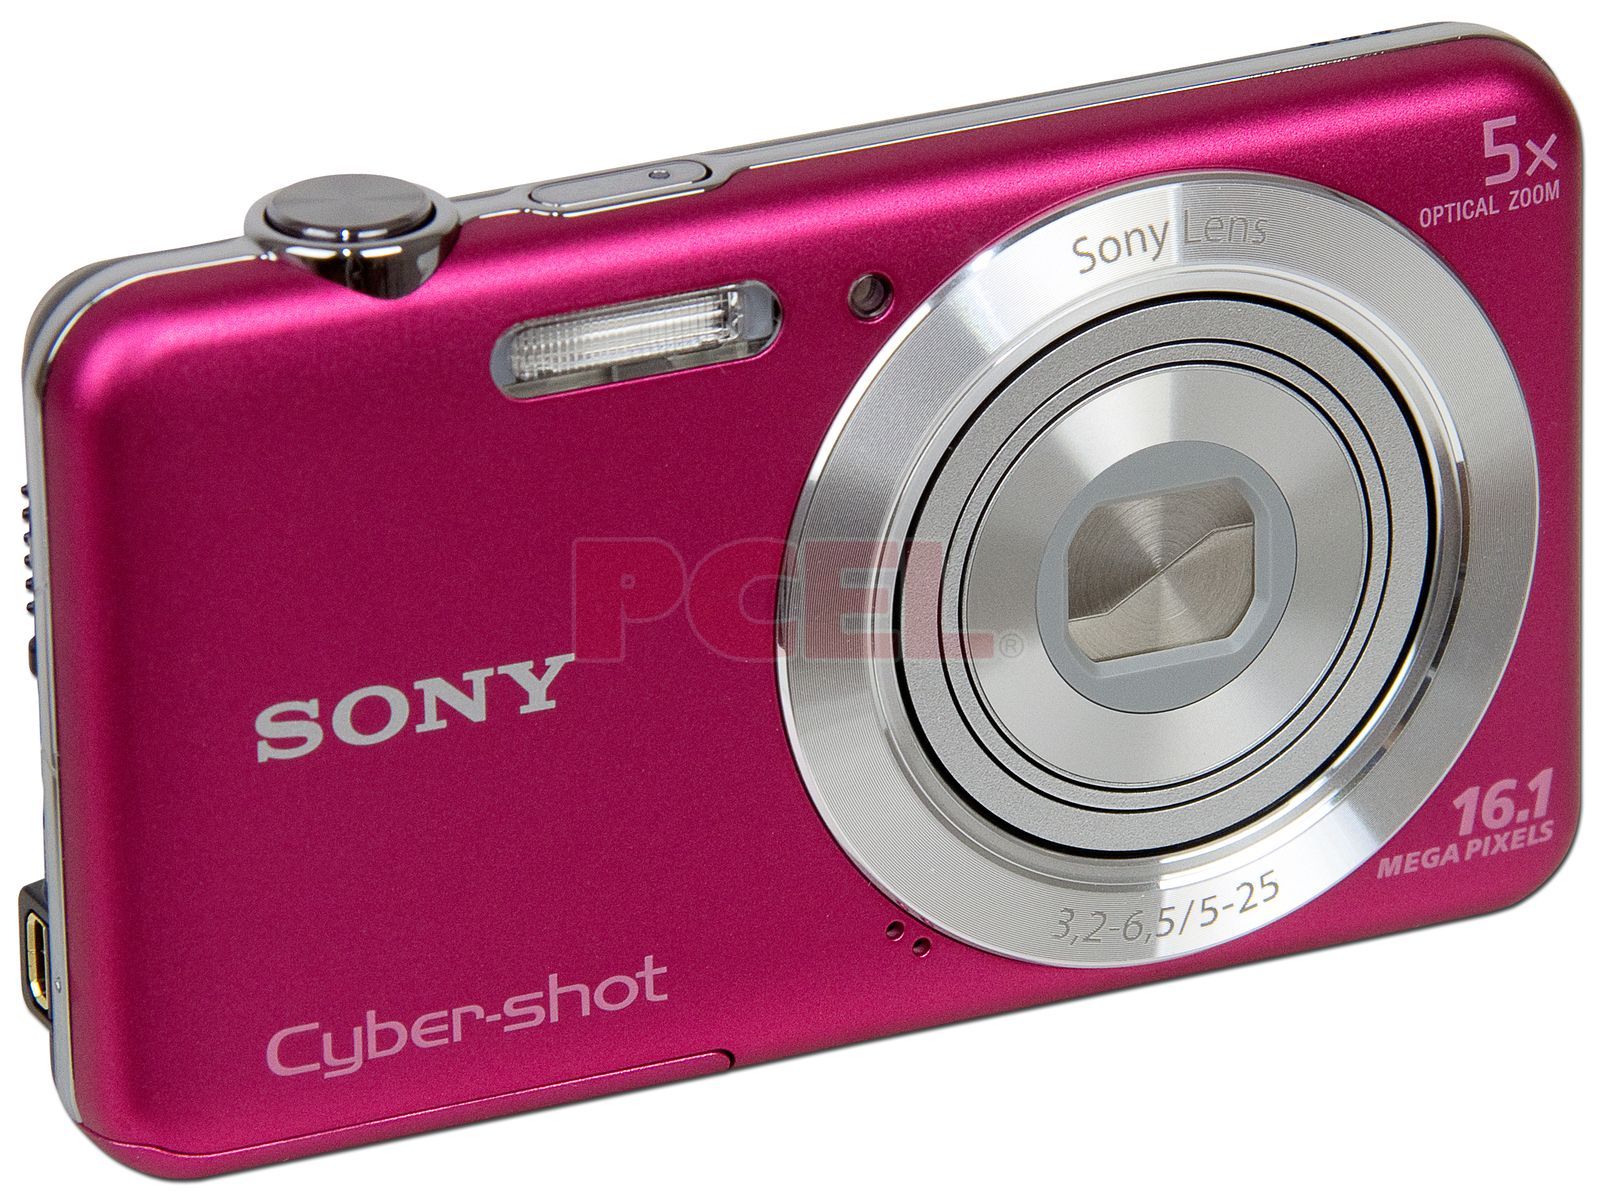 Cámara Fotográfica Digital Sony Cyber-Shot DSC-W710, 16.1 MP, Zoom